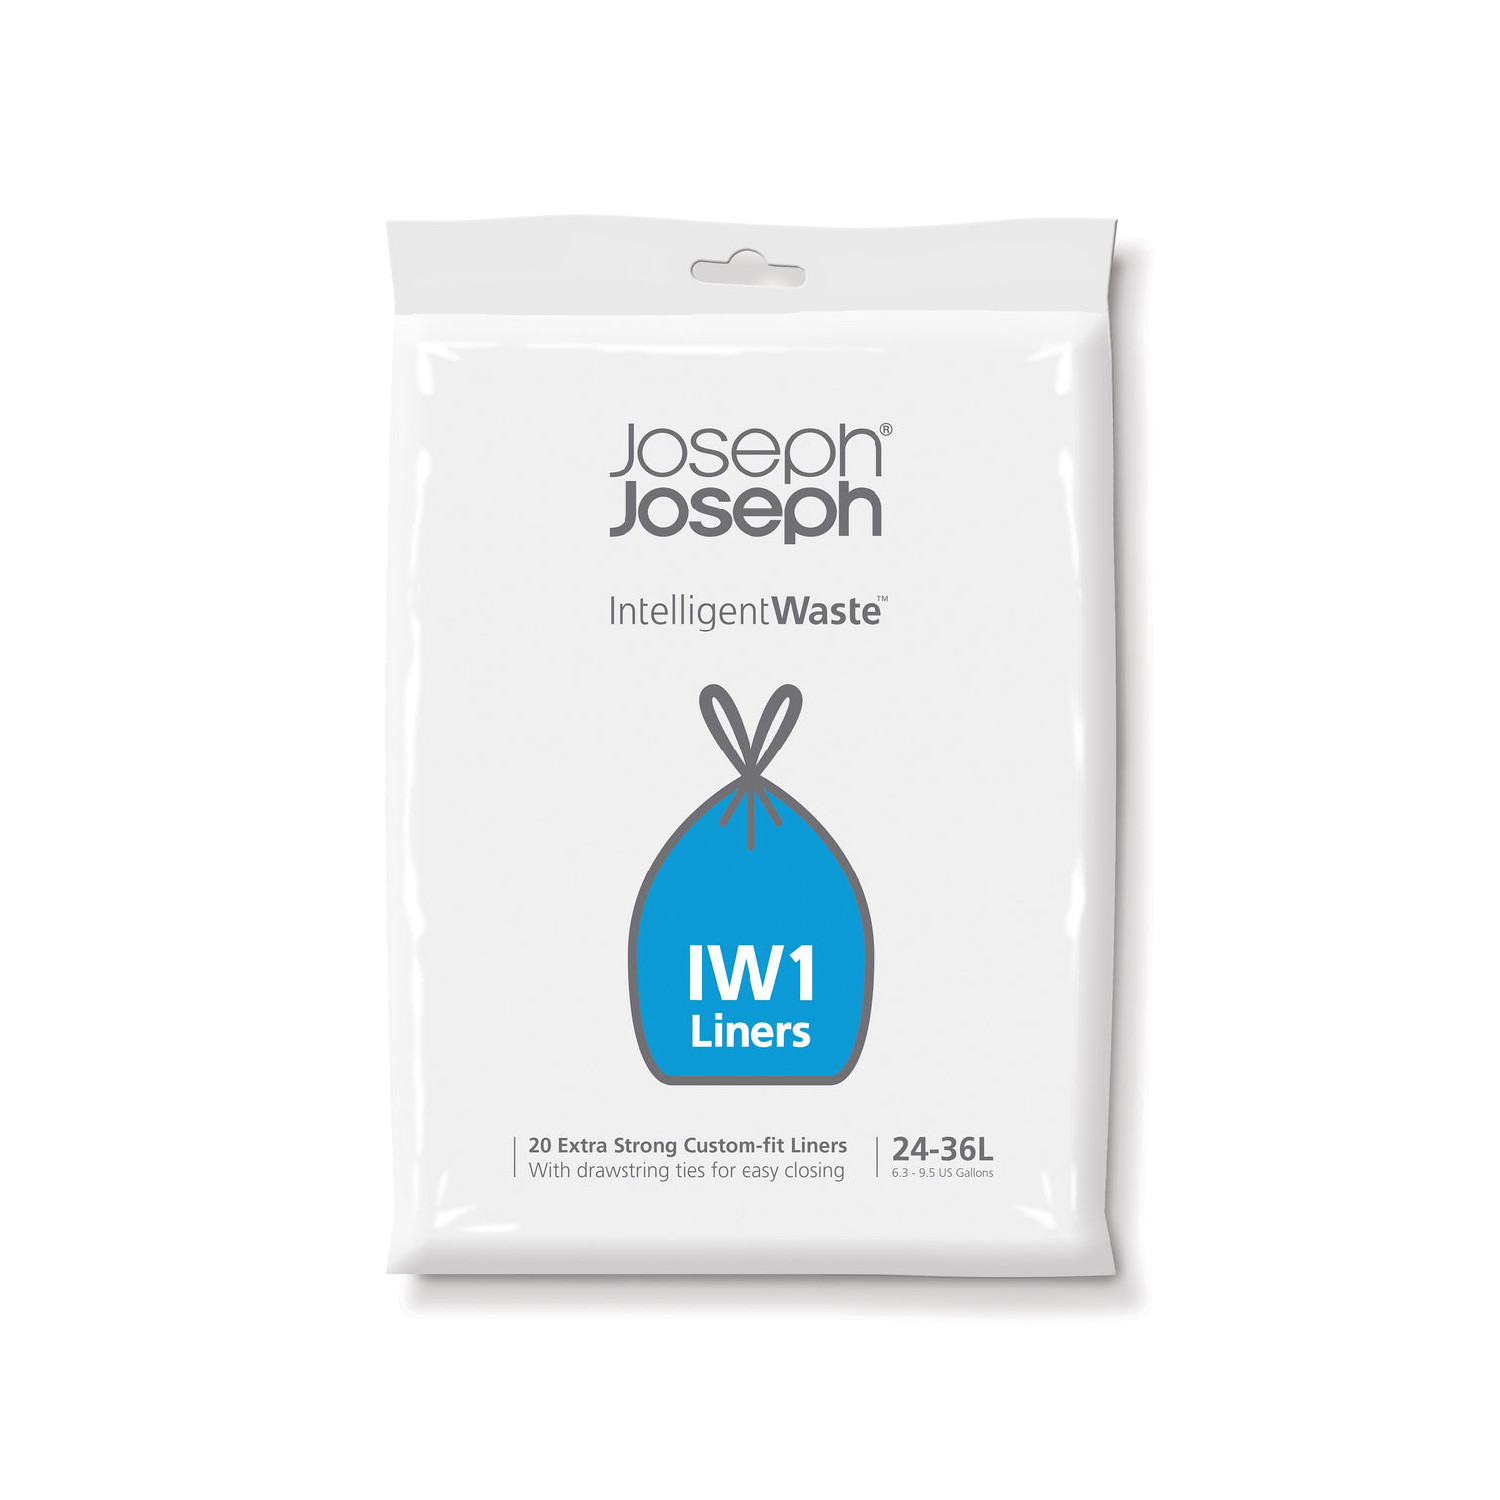 General waste liners IW1 Joseph Joseph